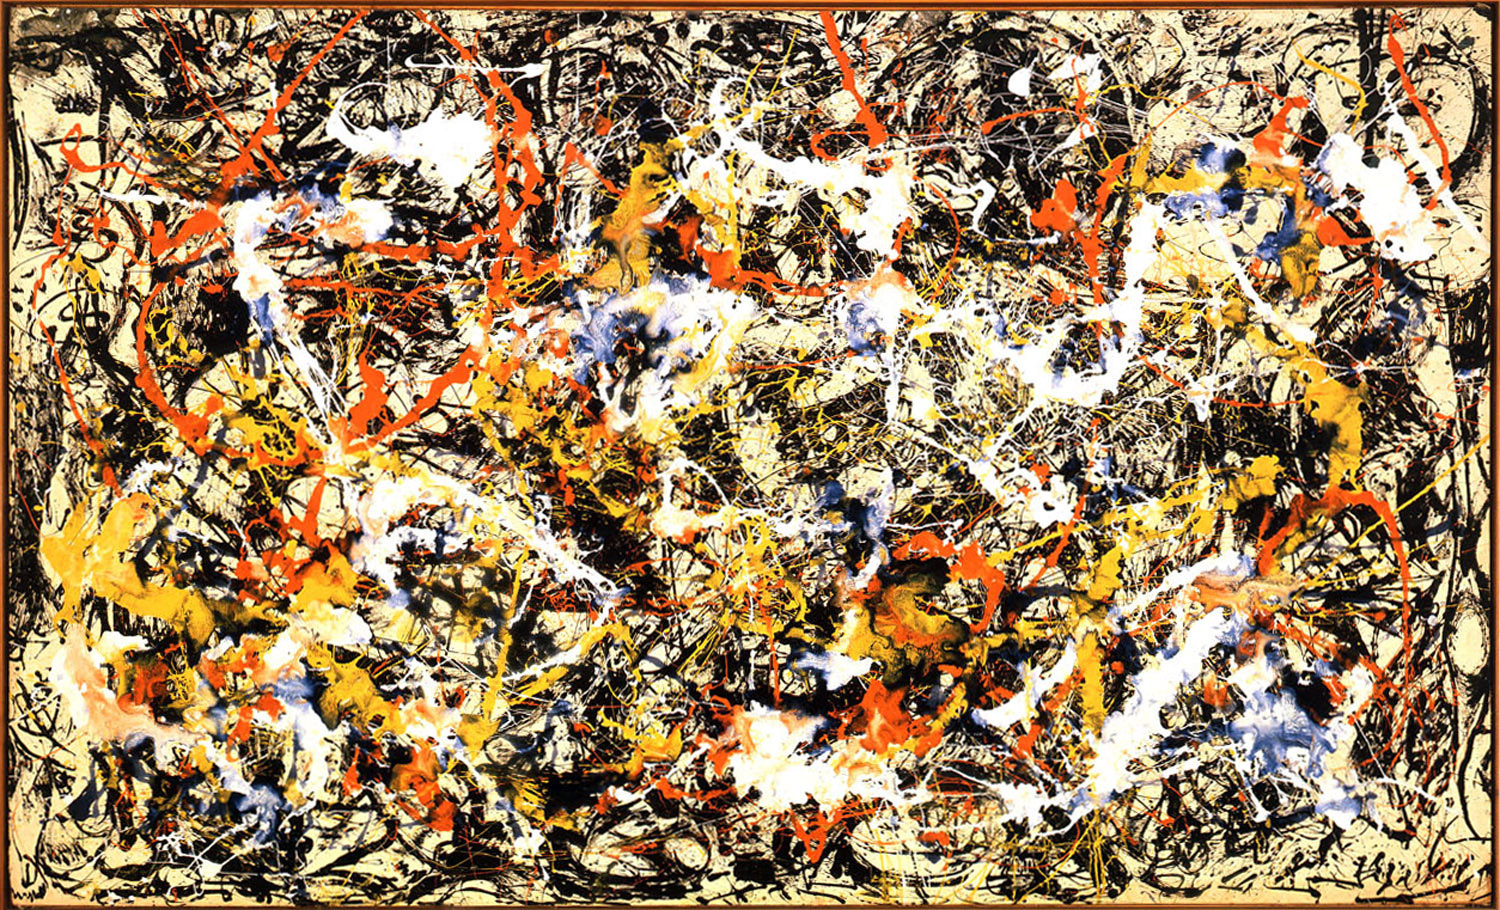 Jason Pollock "Convergence"